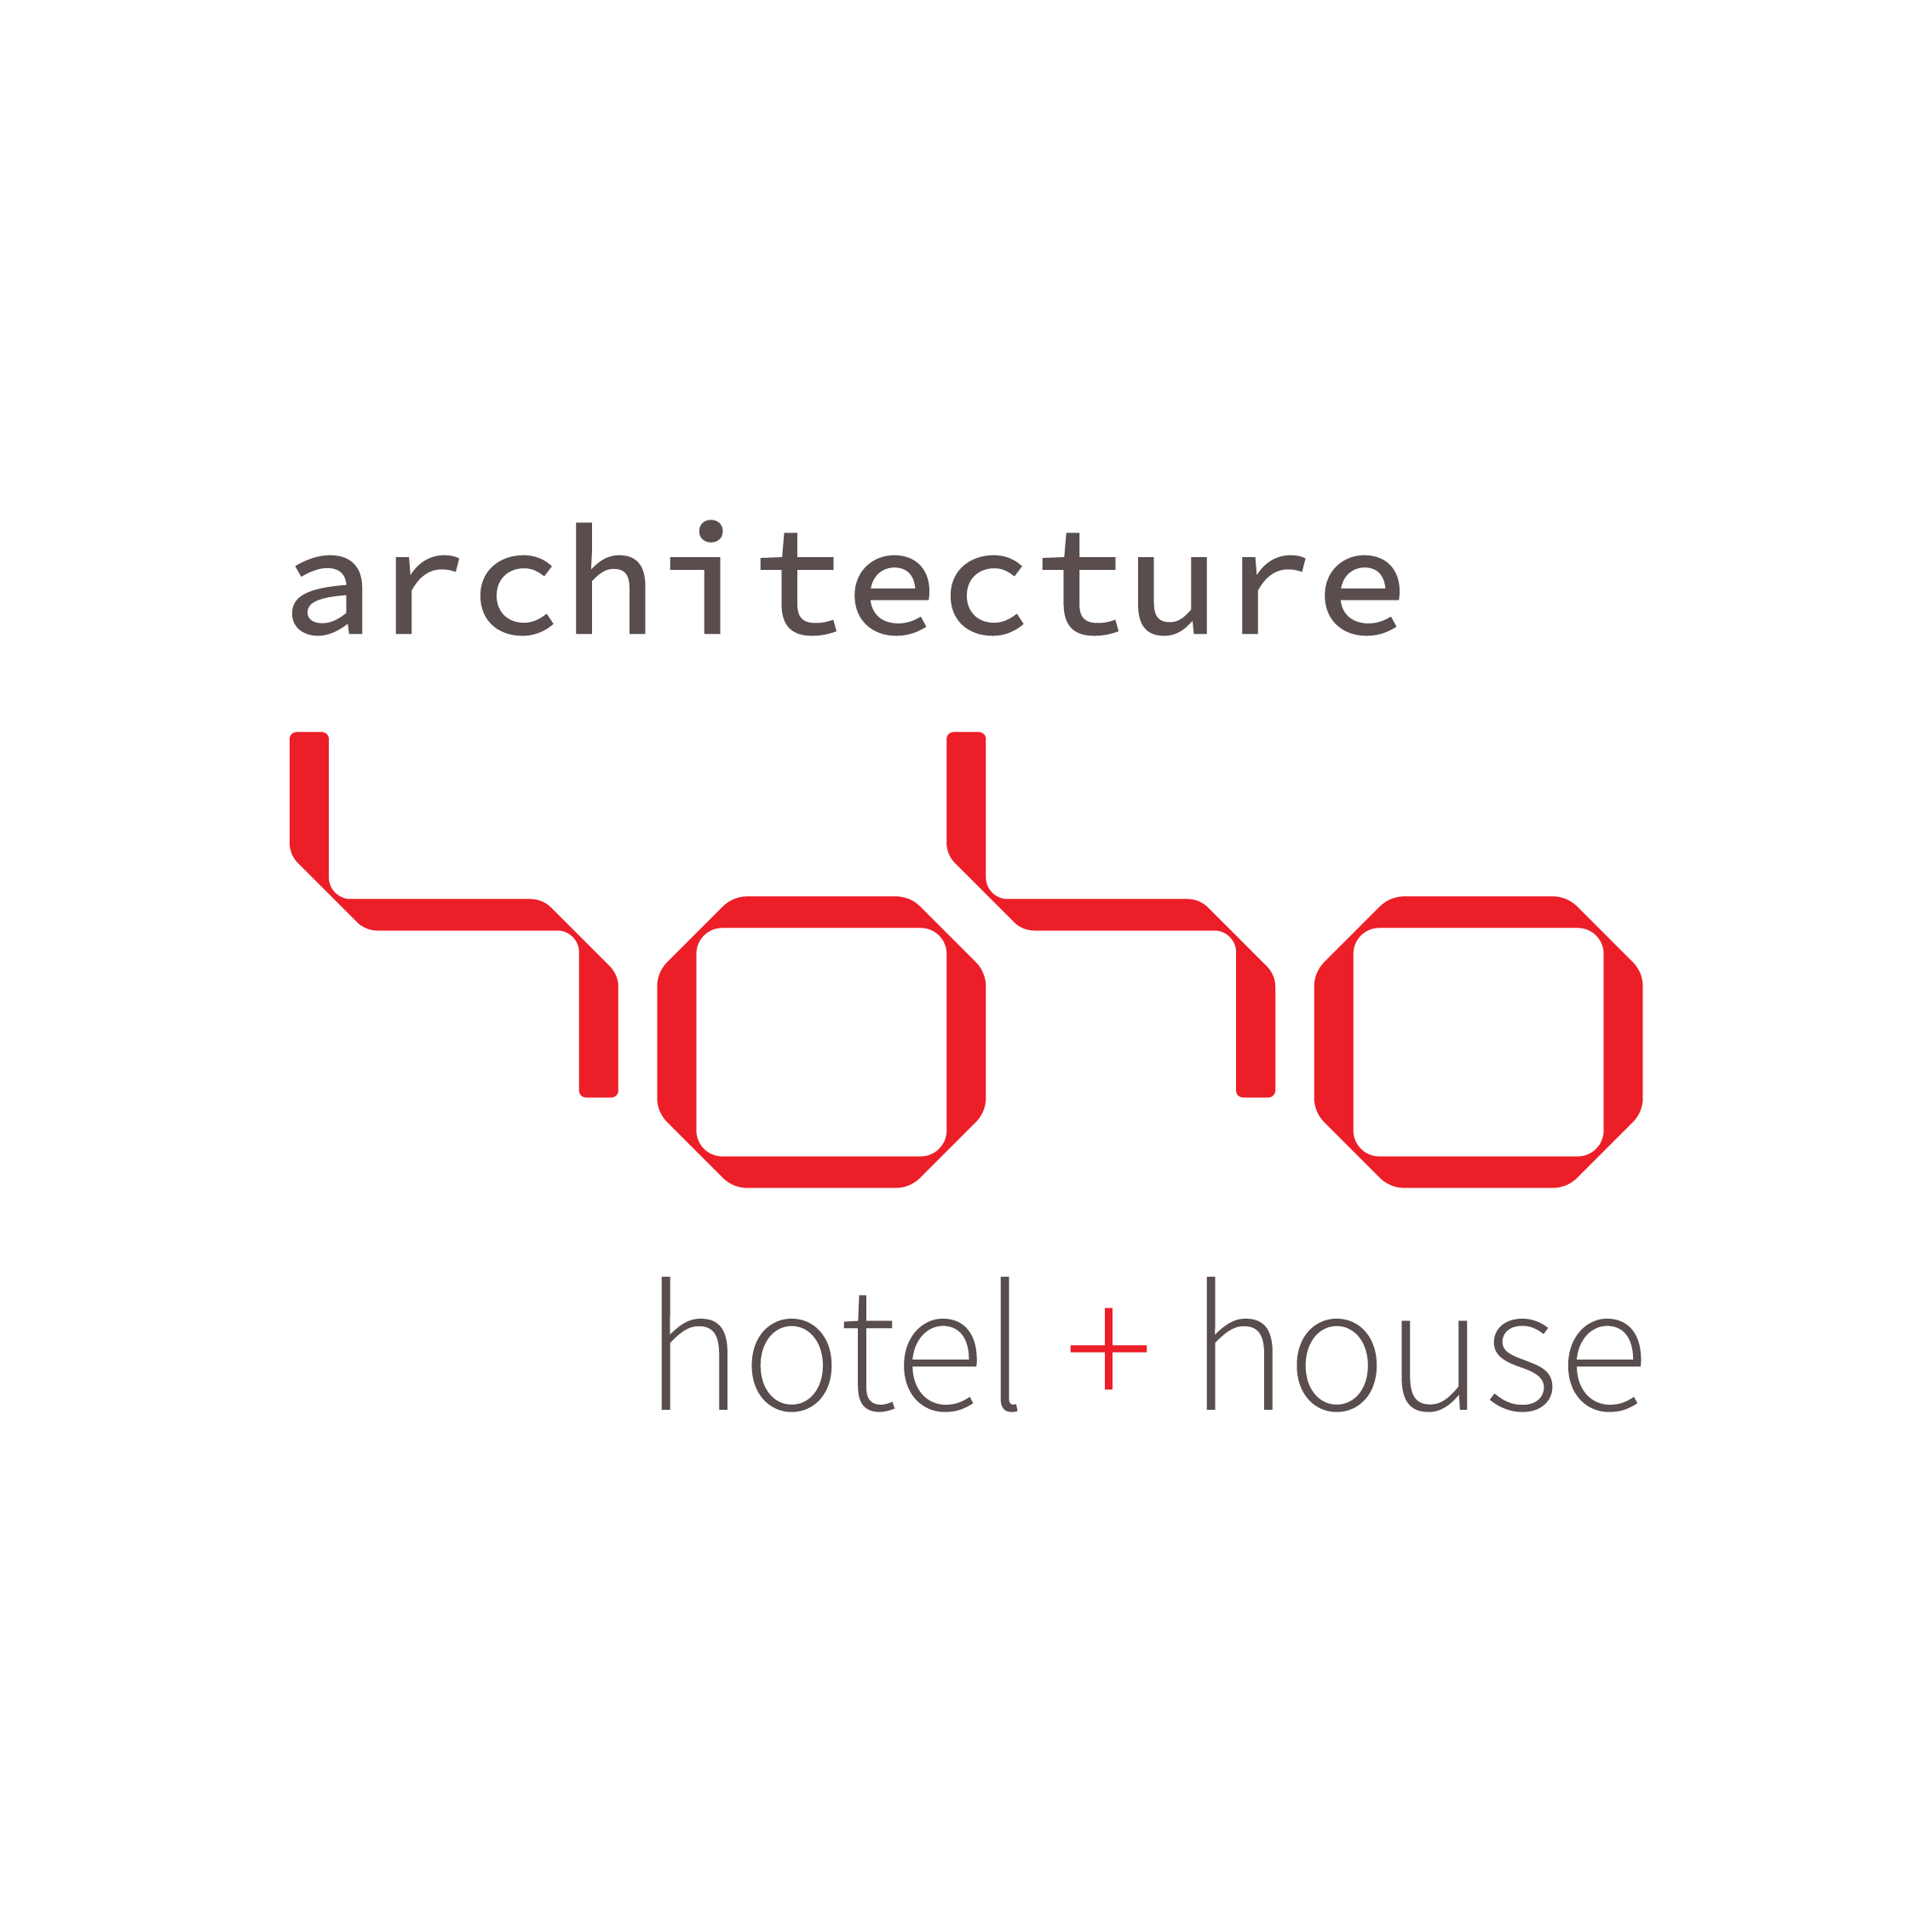 Architecture HoHo